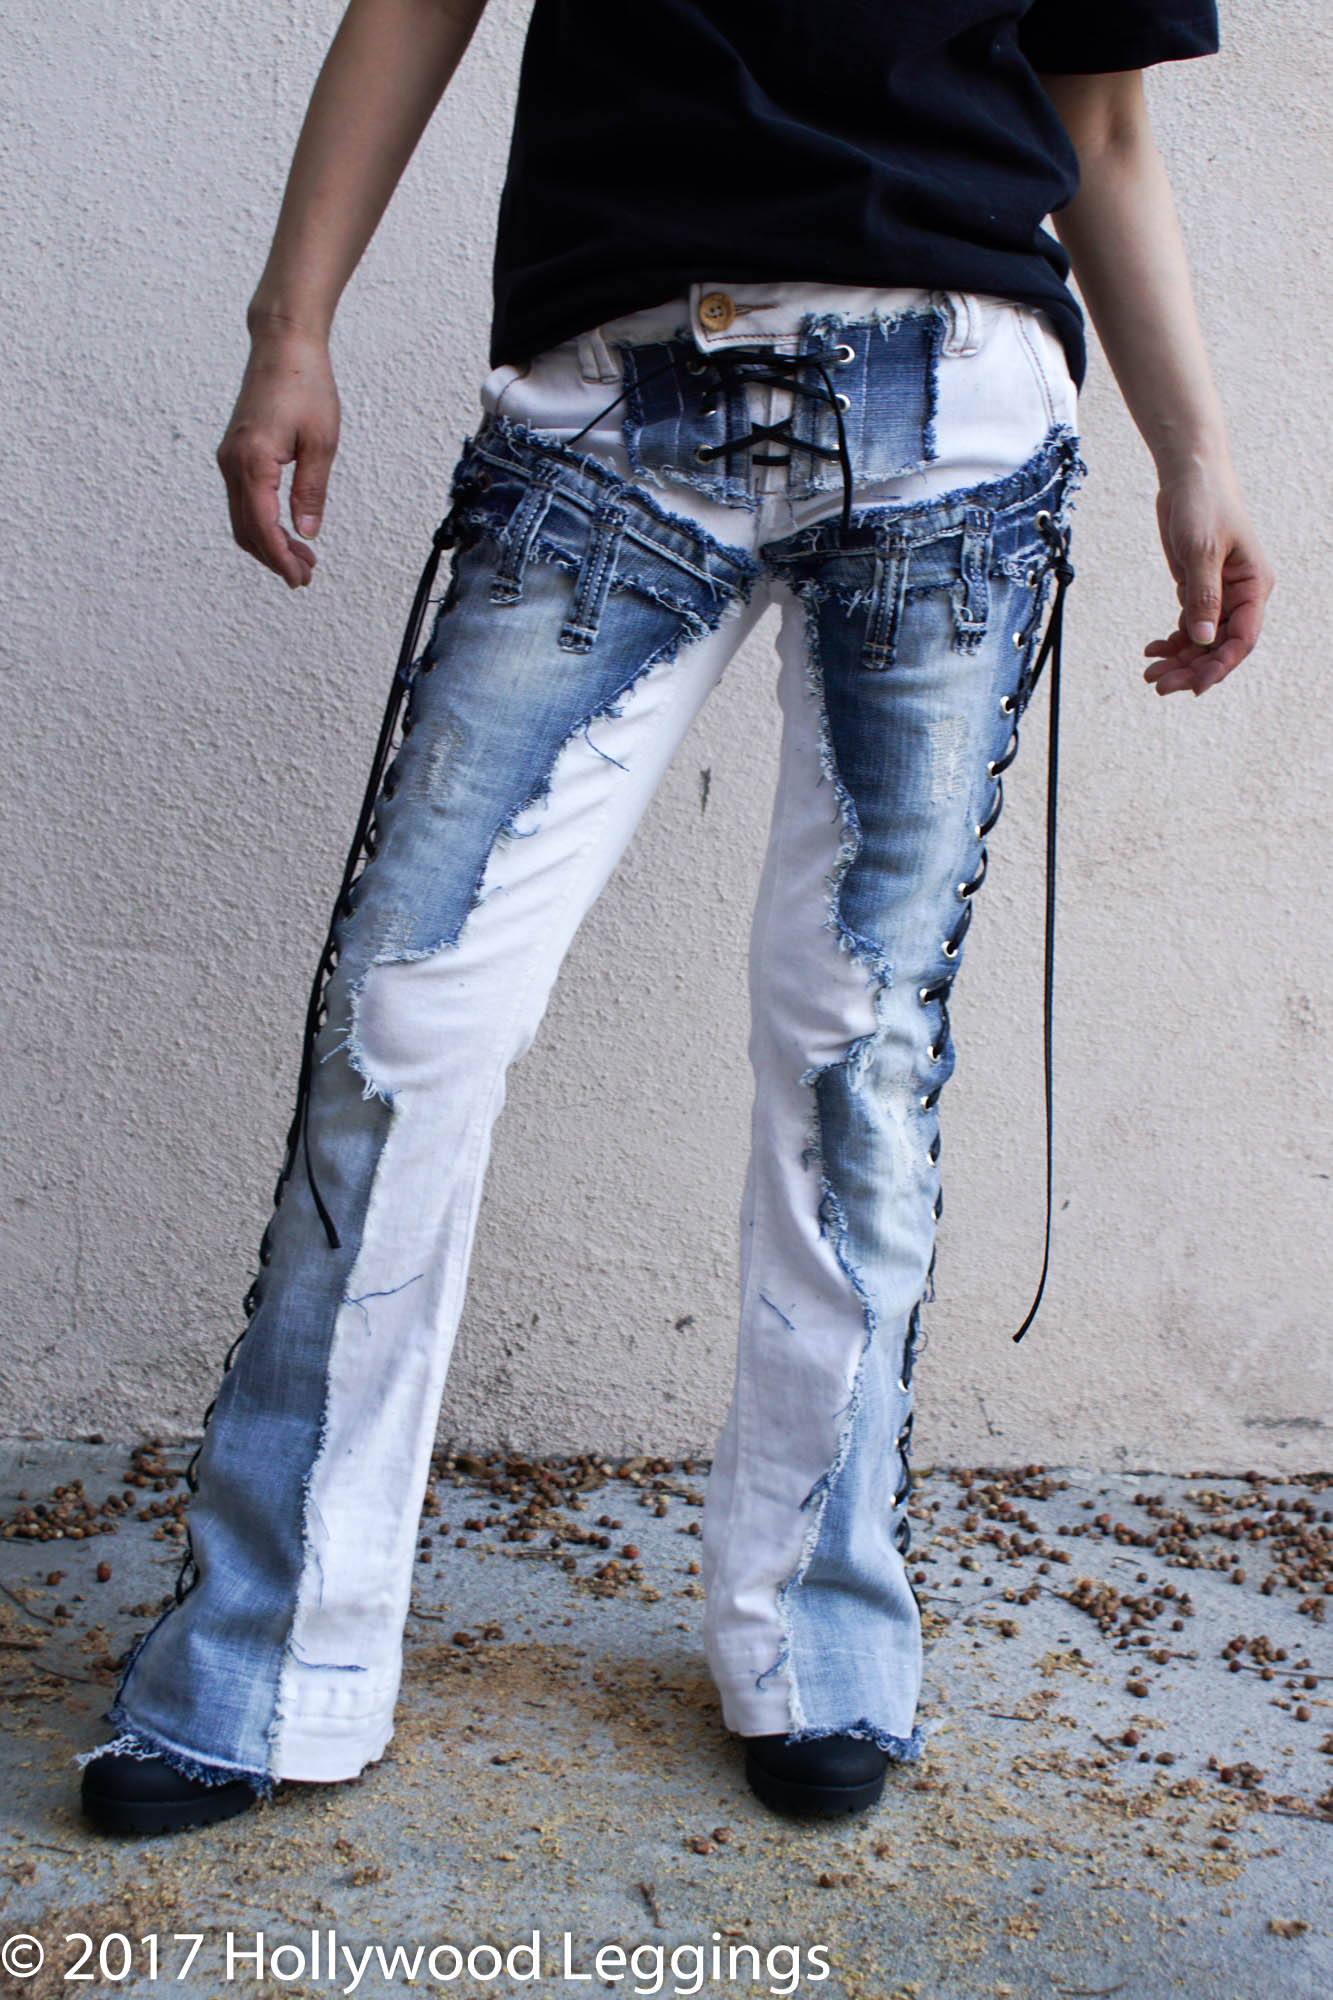 jeans white blue